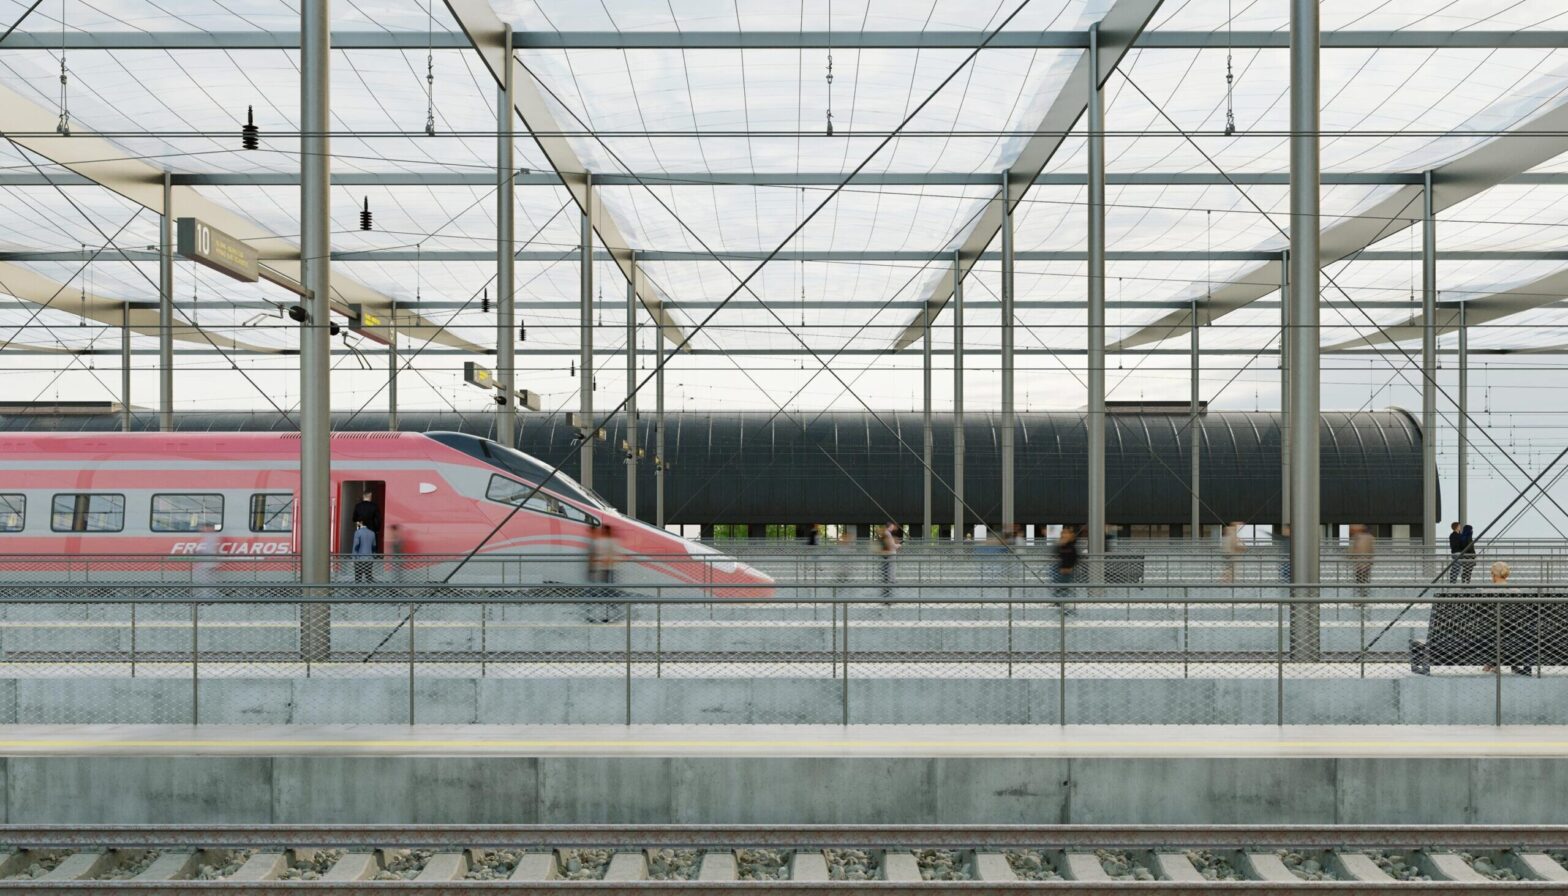 render architecture, Atelier mandrup, Stazione Milano Lambrate, srender steel structure